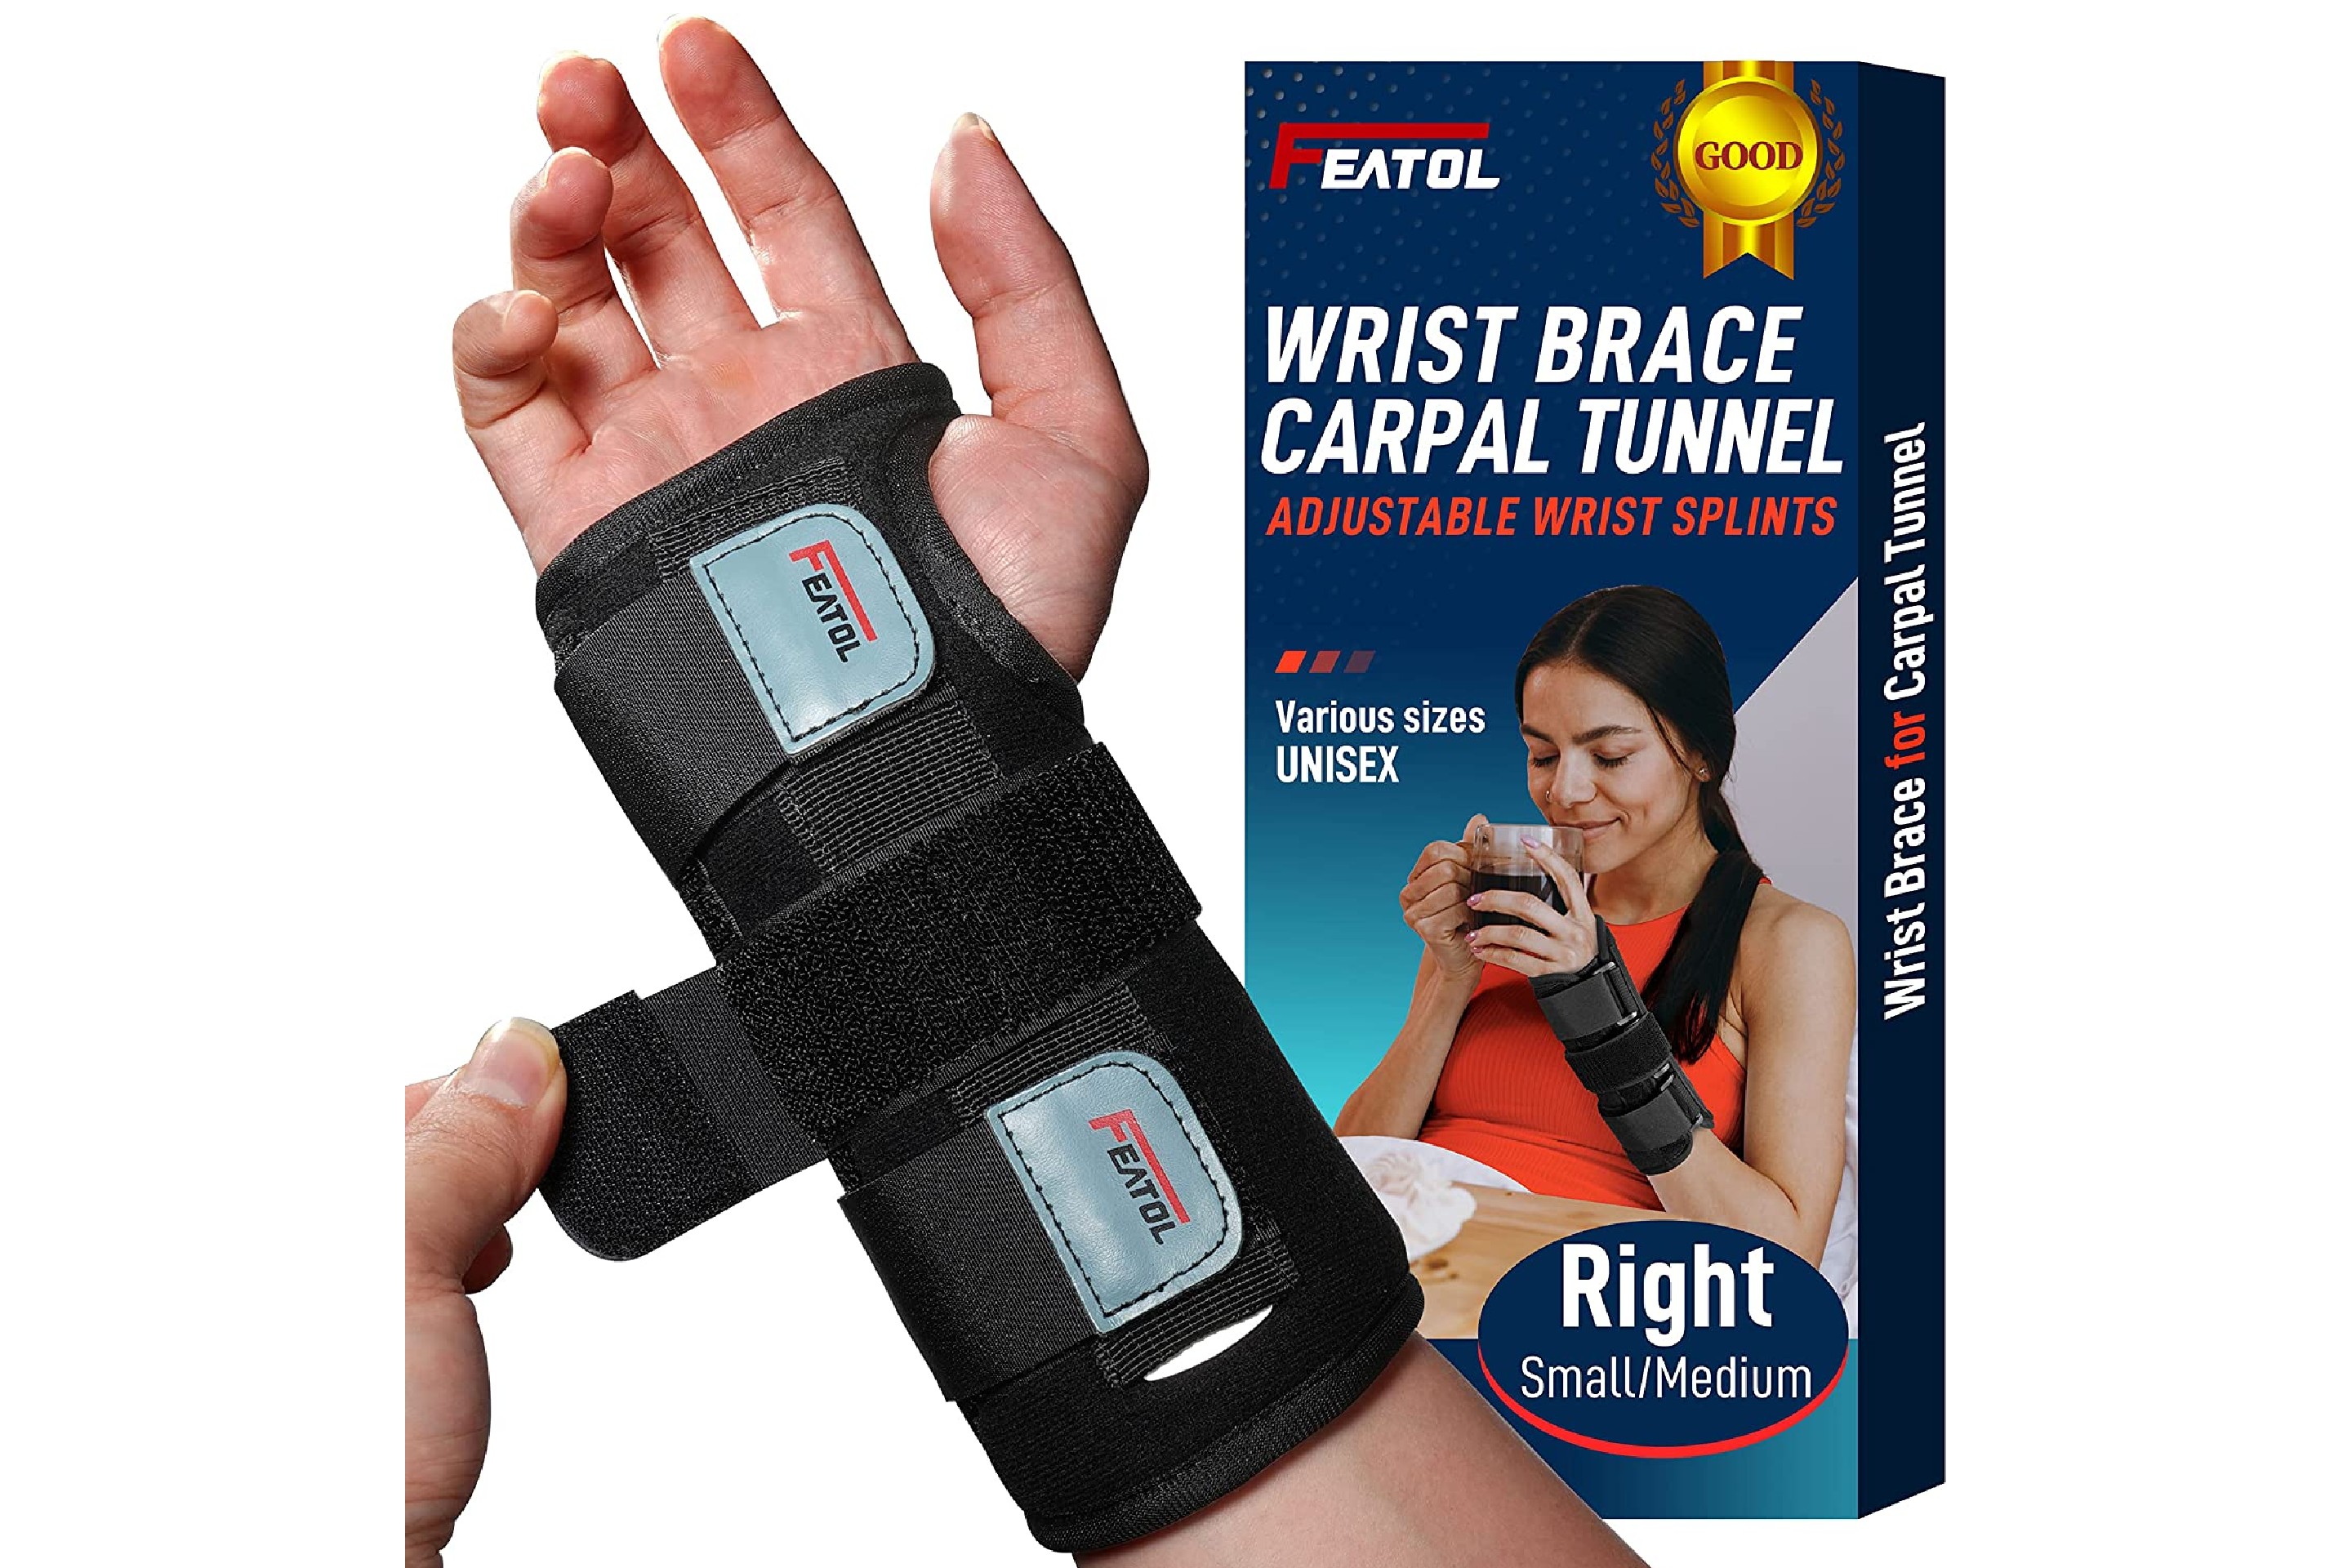 FEATOL Carpal Tunnel Wrist Brace